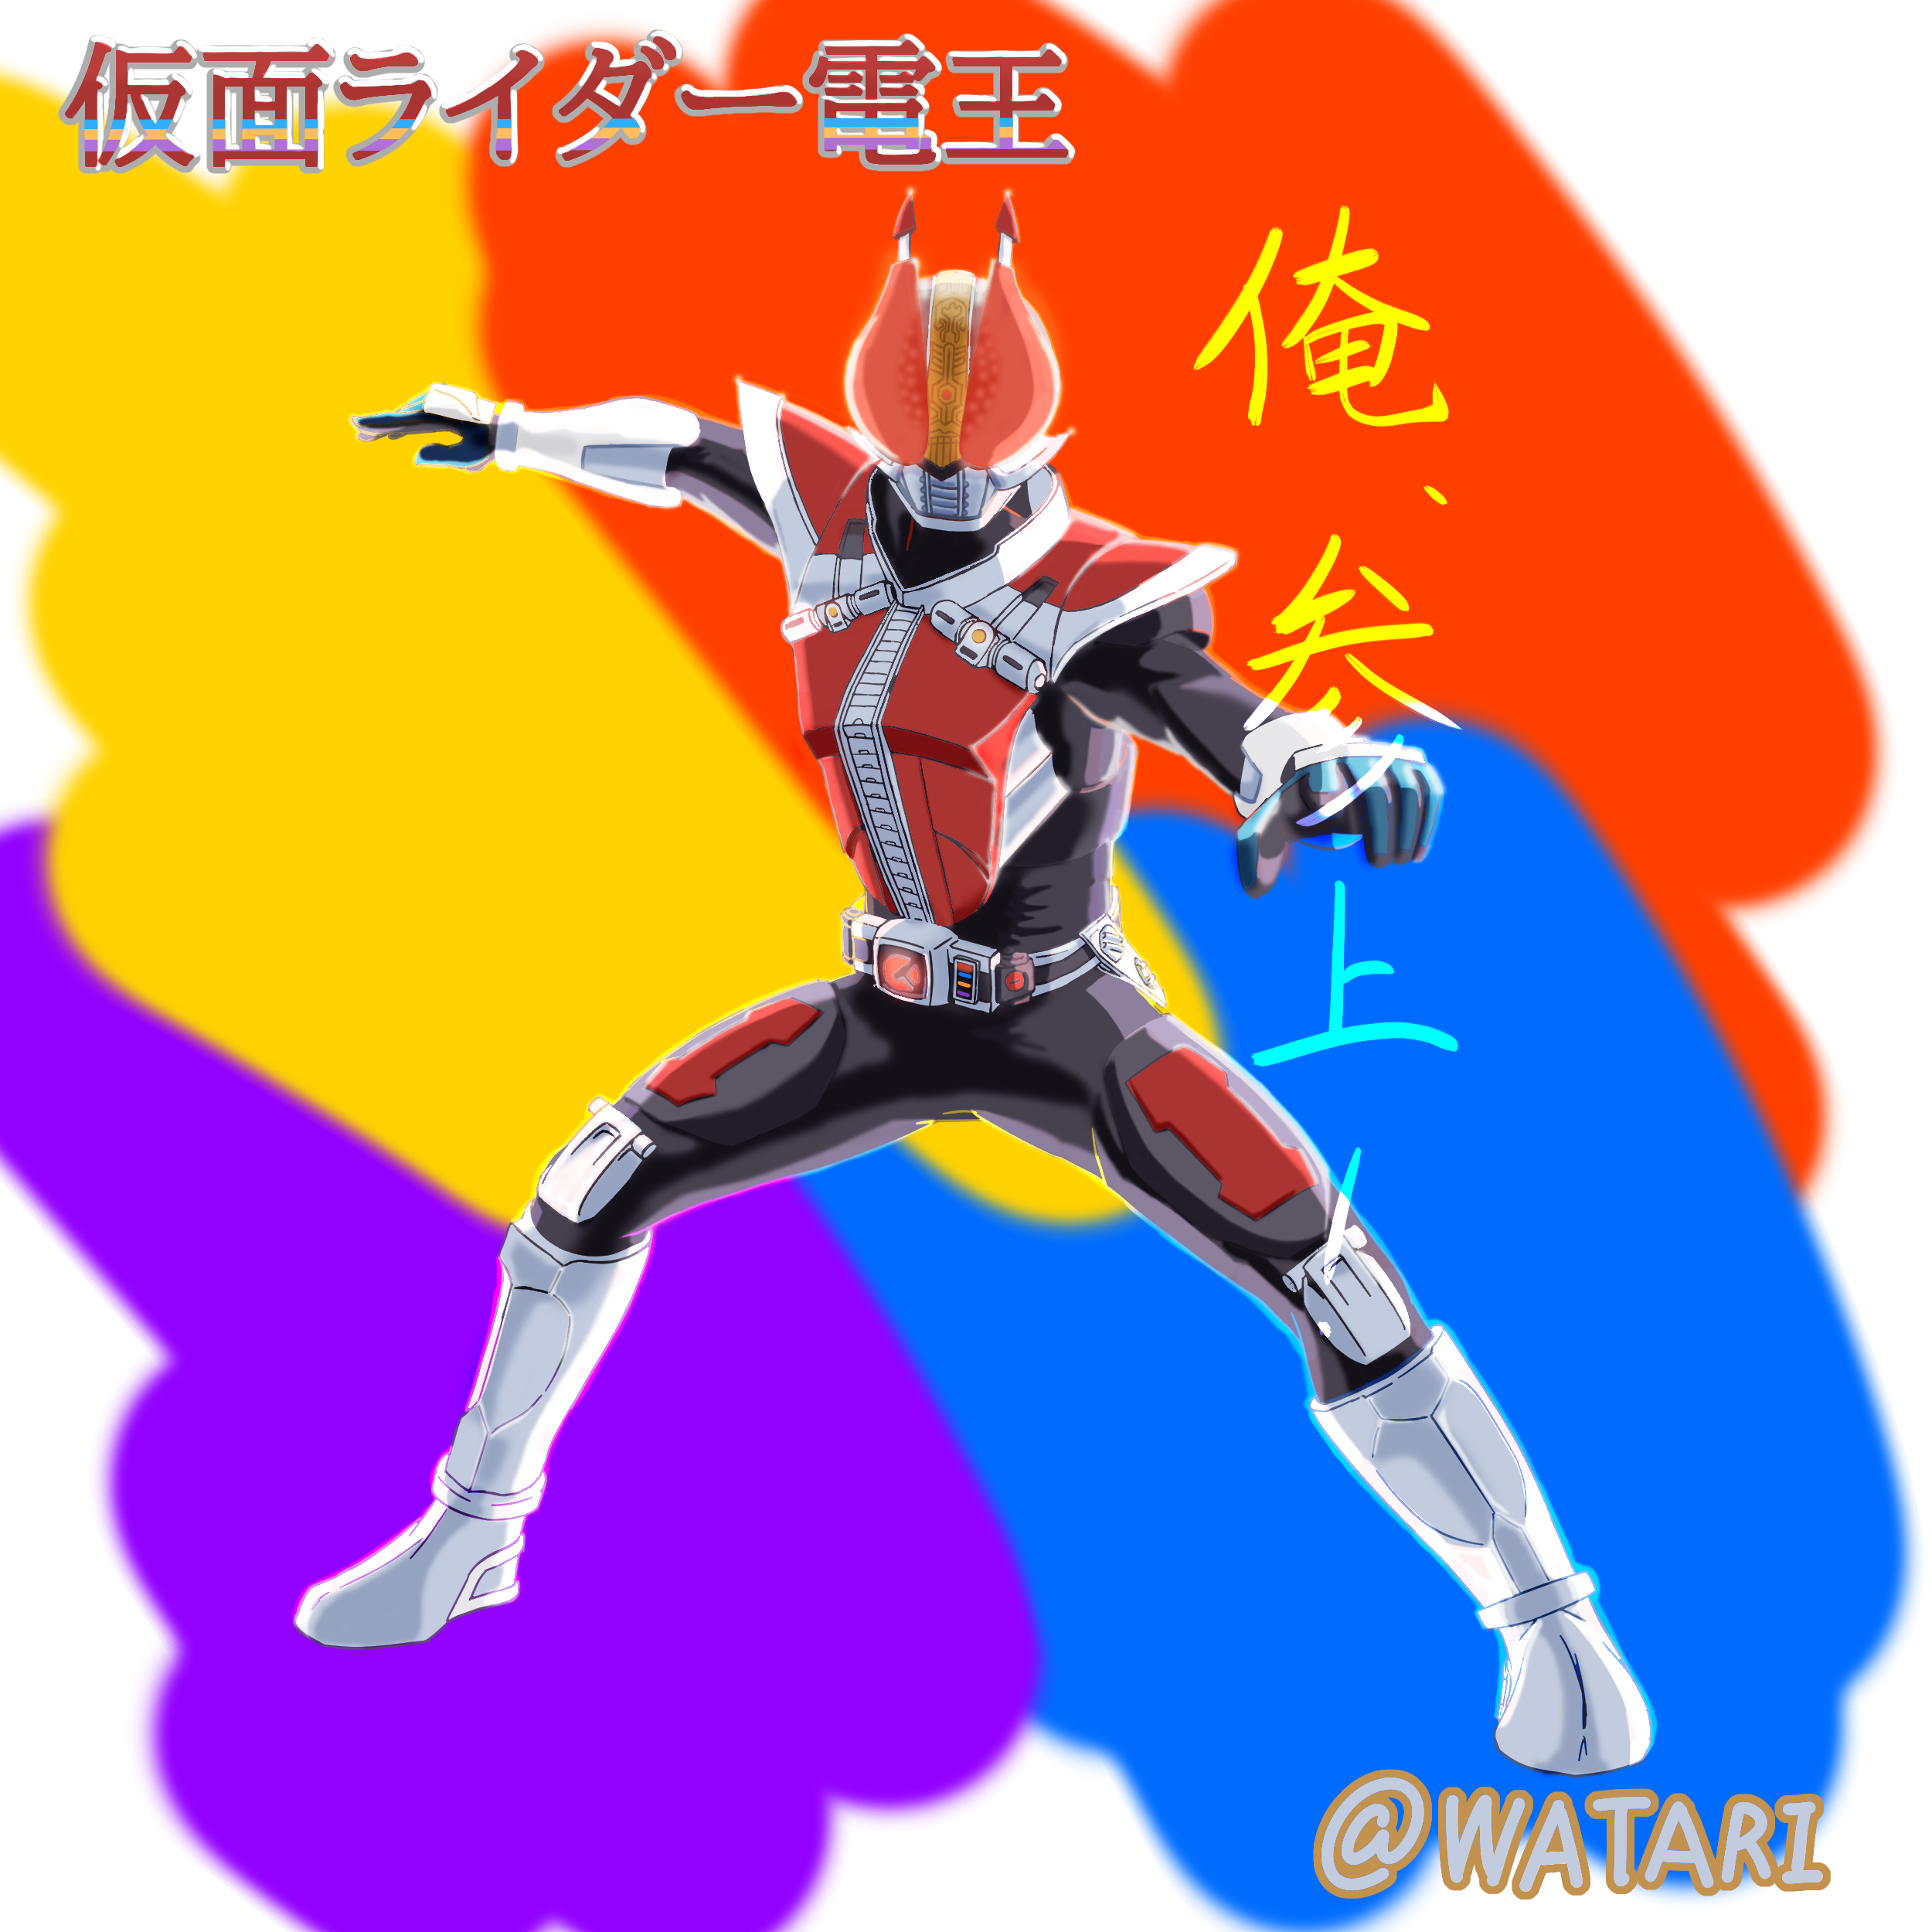 General 2500x2500 anime tokusatsu Kamen Rider Den-O Kamen Rider Den-O Sword Form kamen rider solo artwork digital art fan art